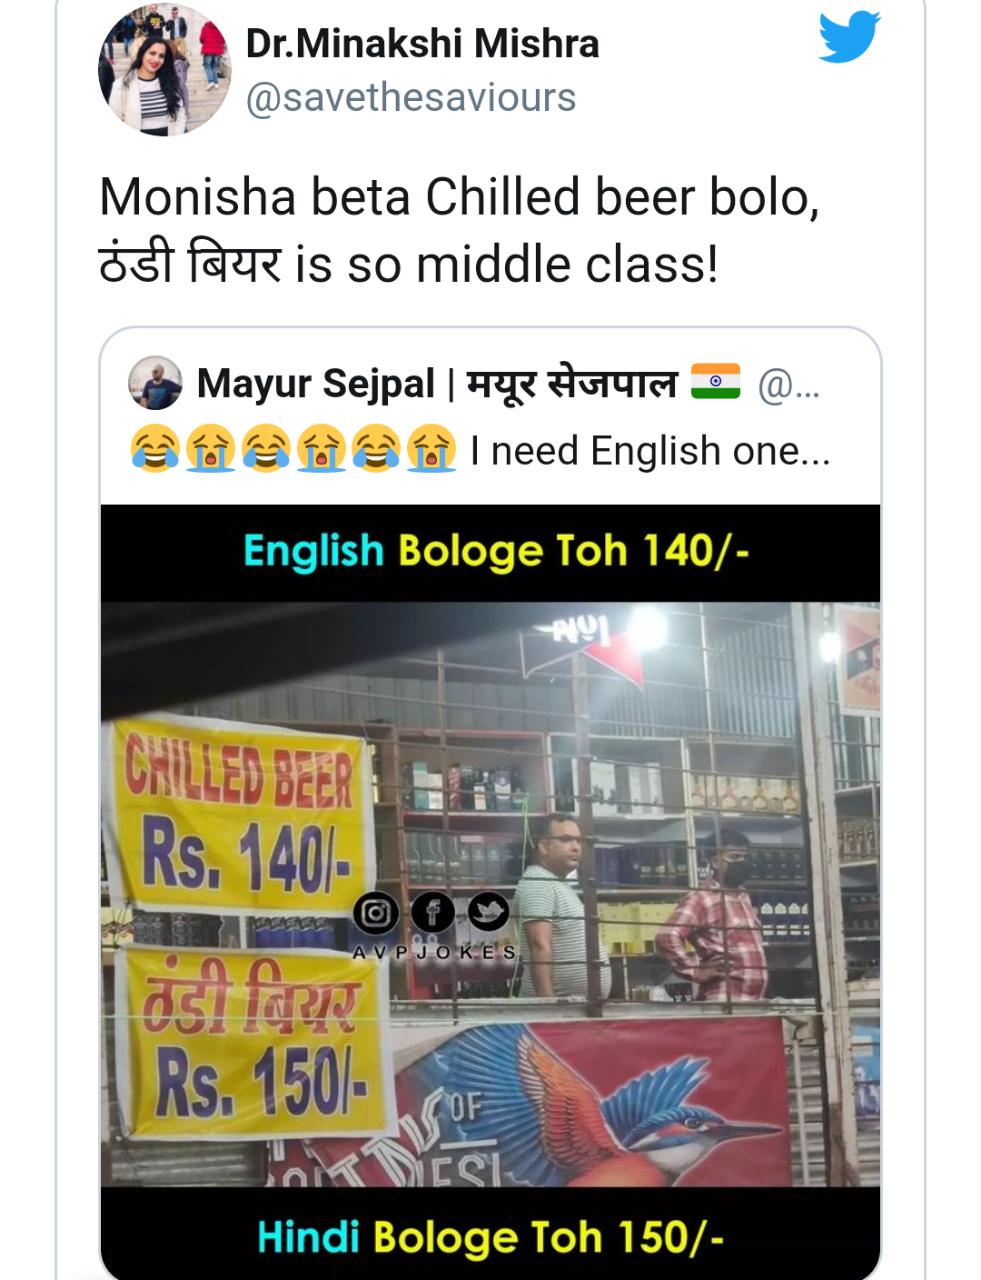 मोनिशा बेटा ठंडी बियर इज मिडल क्लास